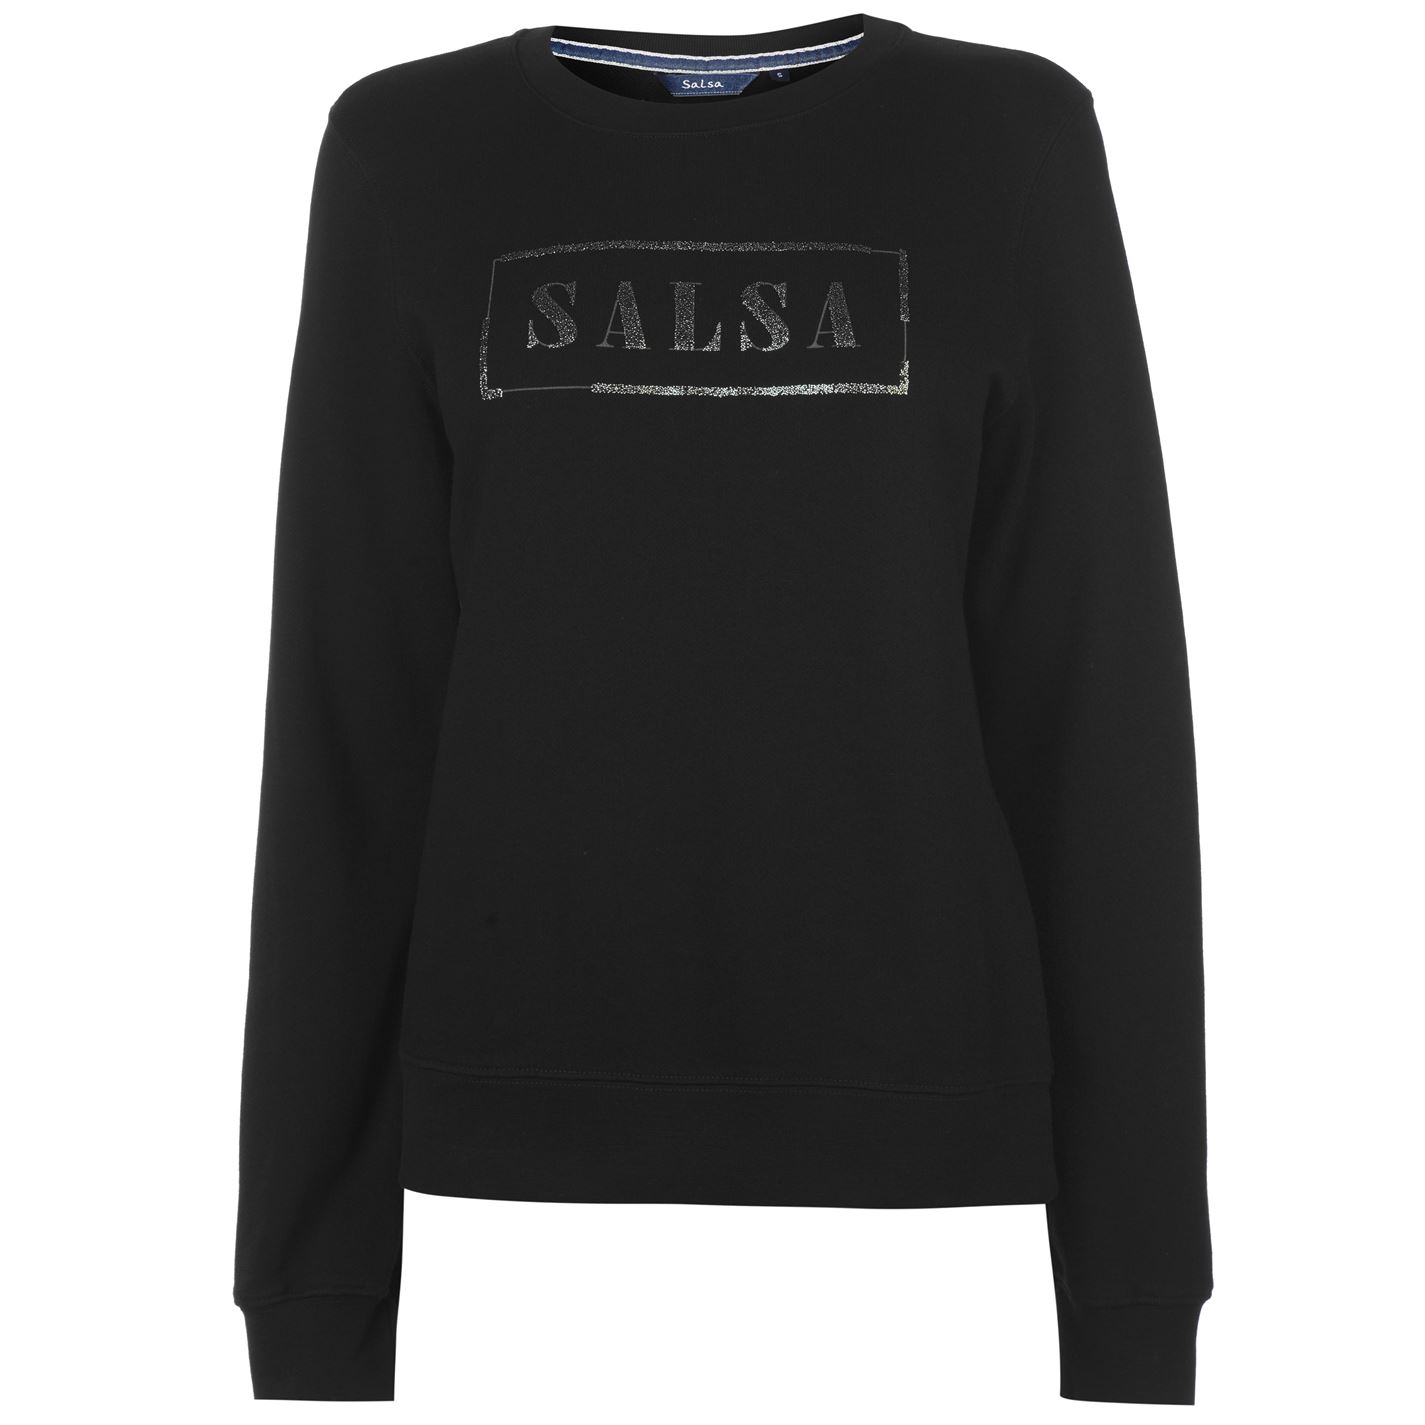 Bluze trening Salsa Salsa Logo pentru femei